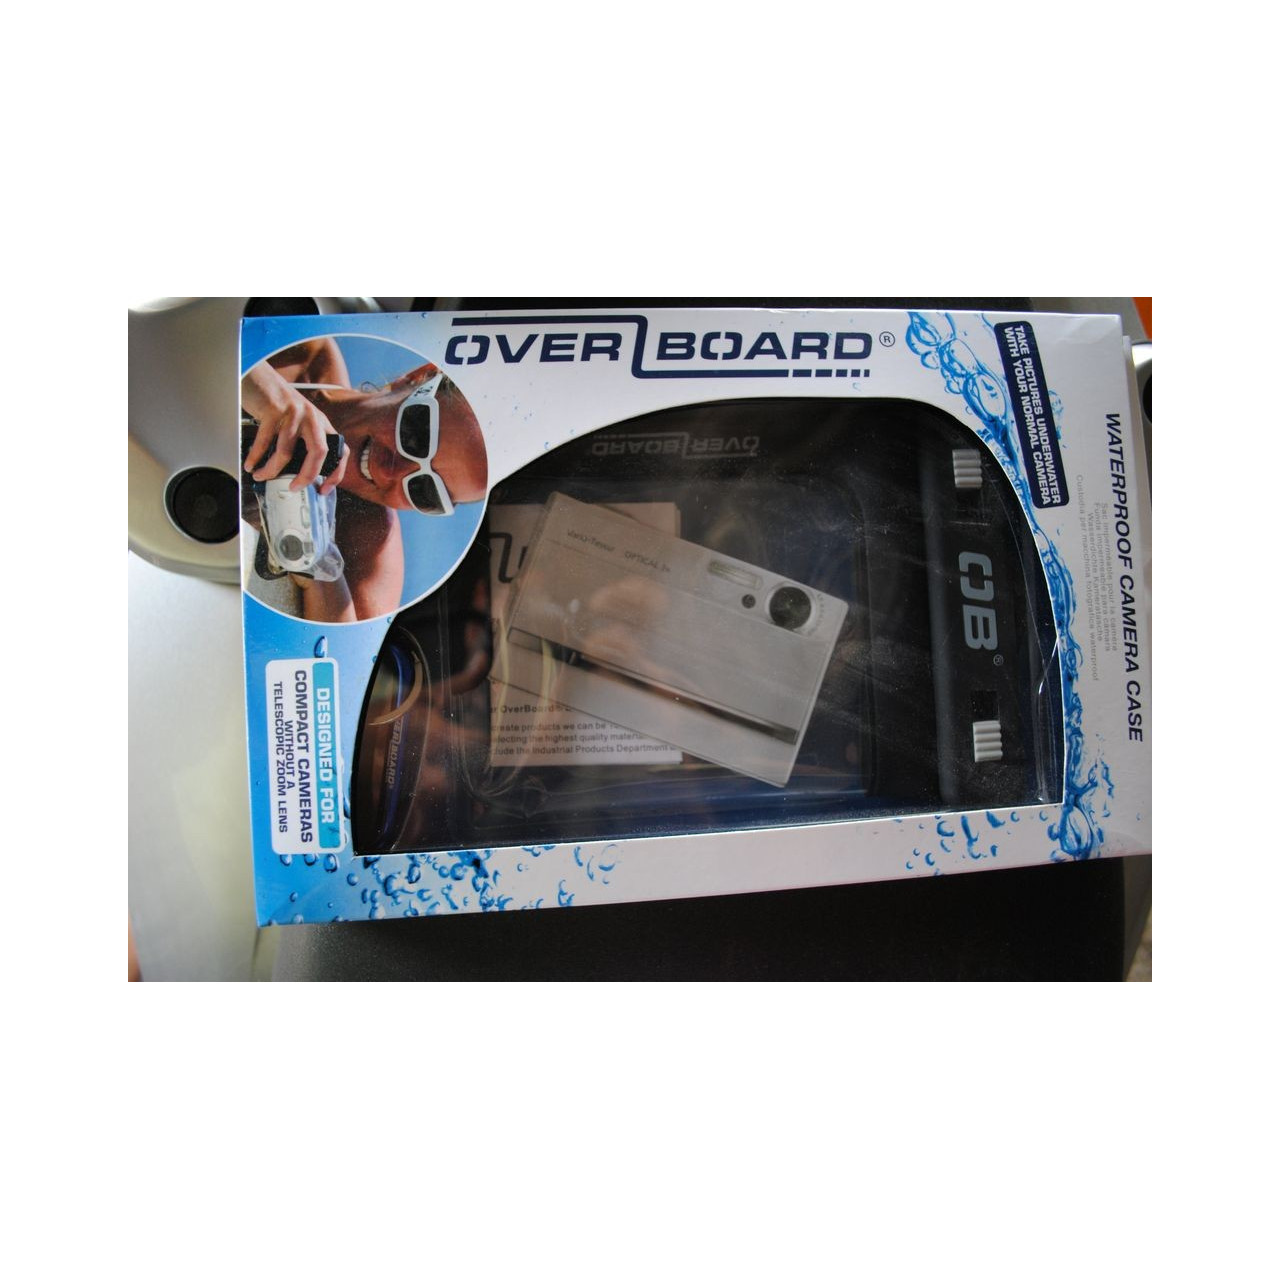 Overboard Waterproof camera case